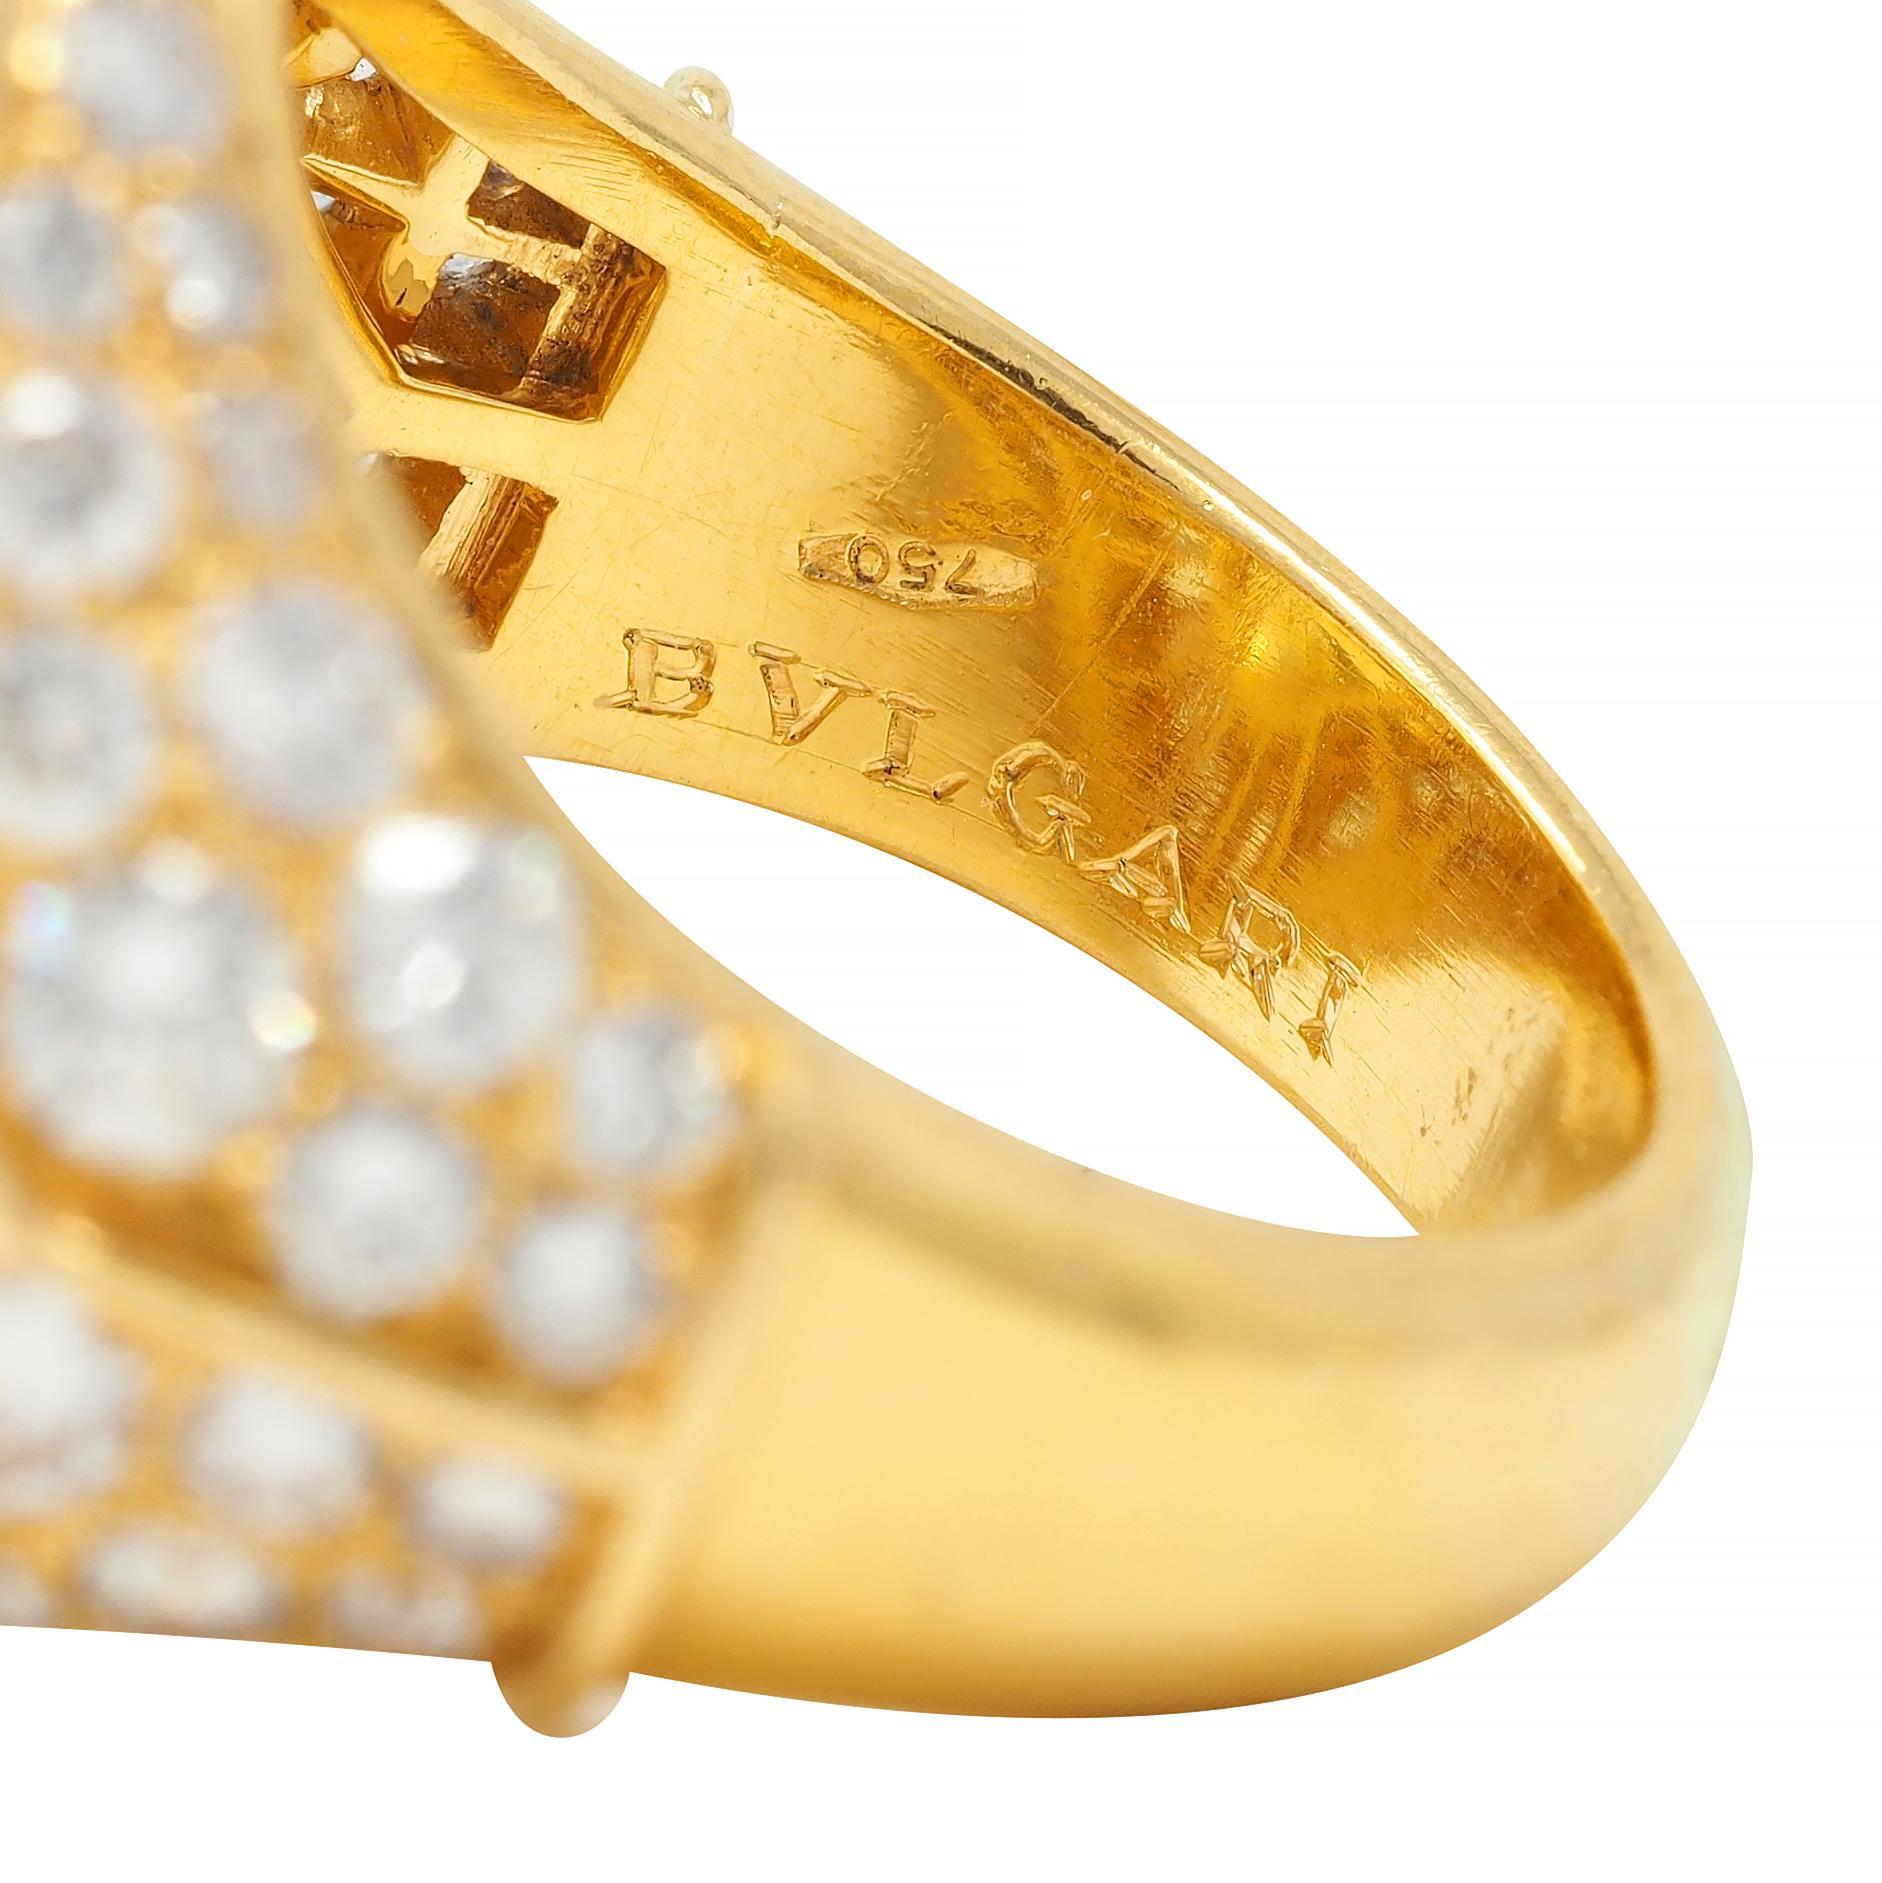 Bulgari Vintage Yellow Sapphire Aquamarine Diamond 18 Karat Gold Halo Ring For Sale 3